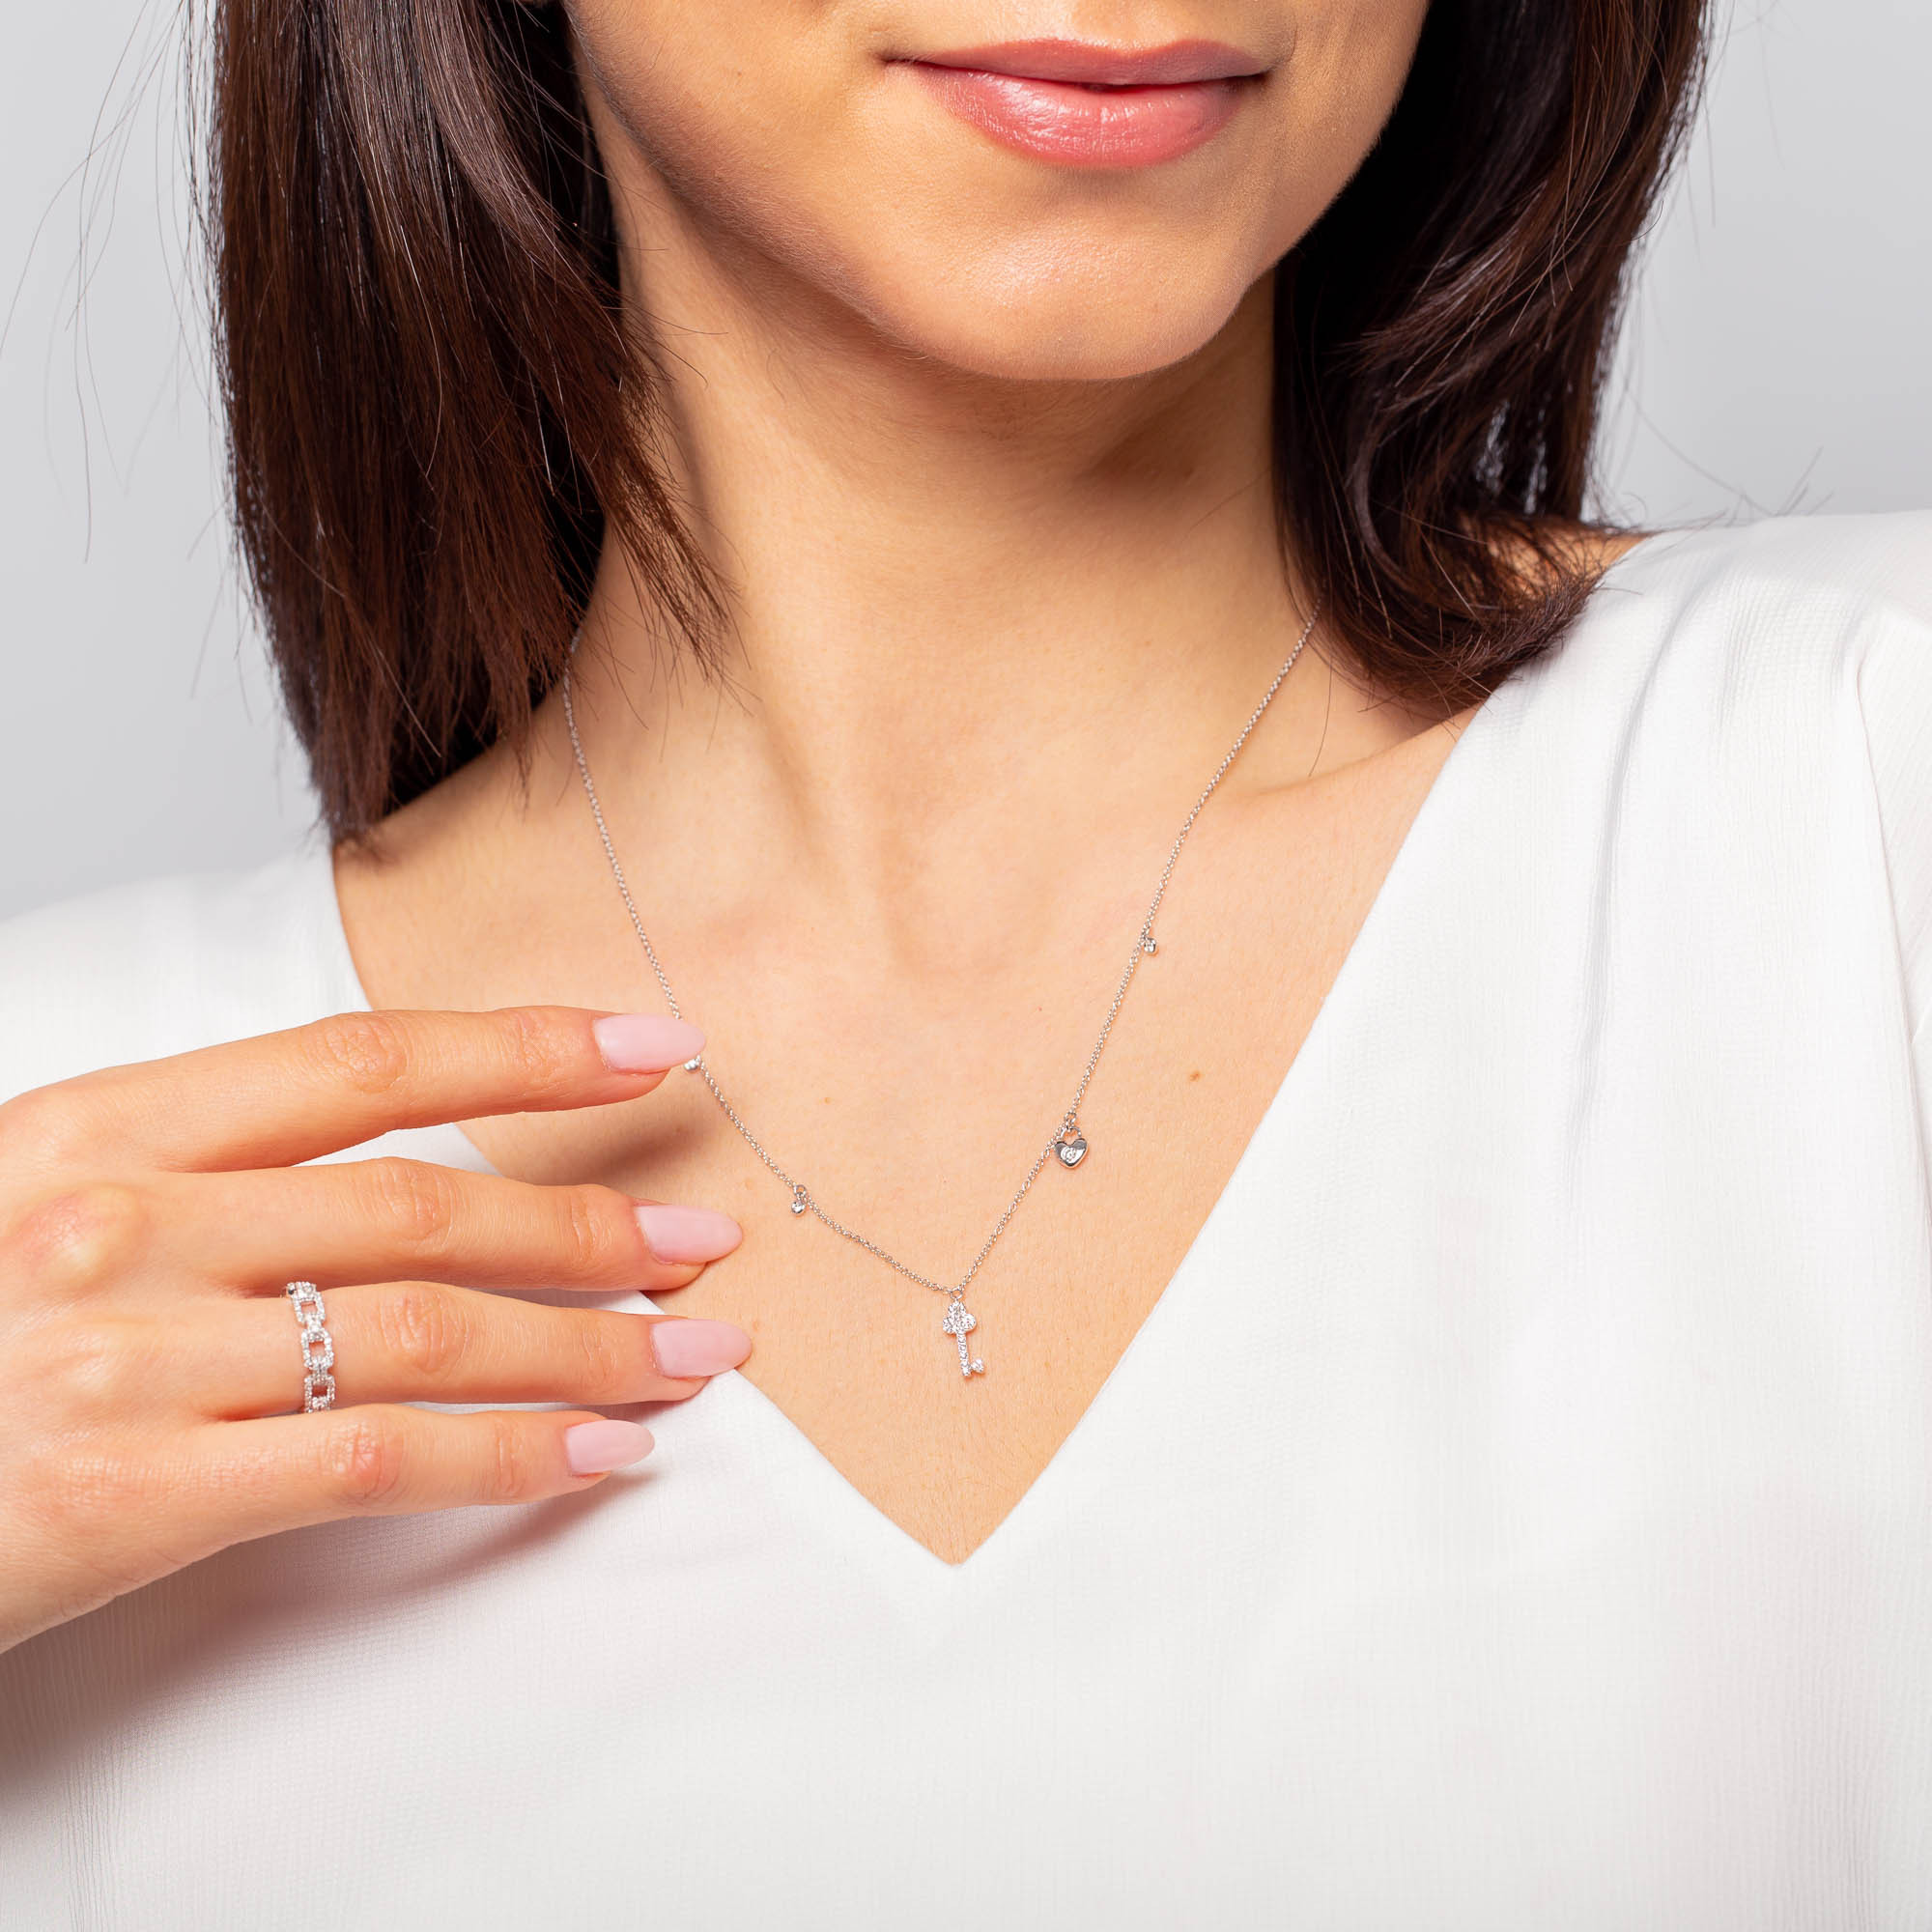 Diamond Key with Heart-Shape Lock Necklace - Platinum 2